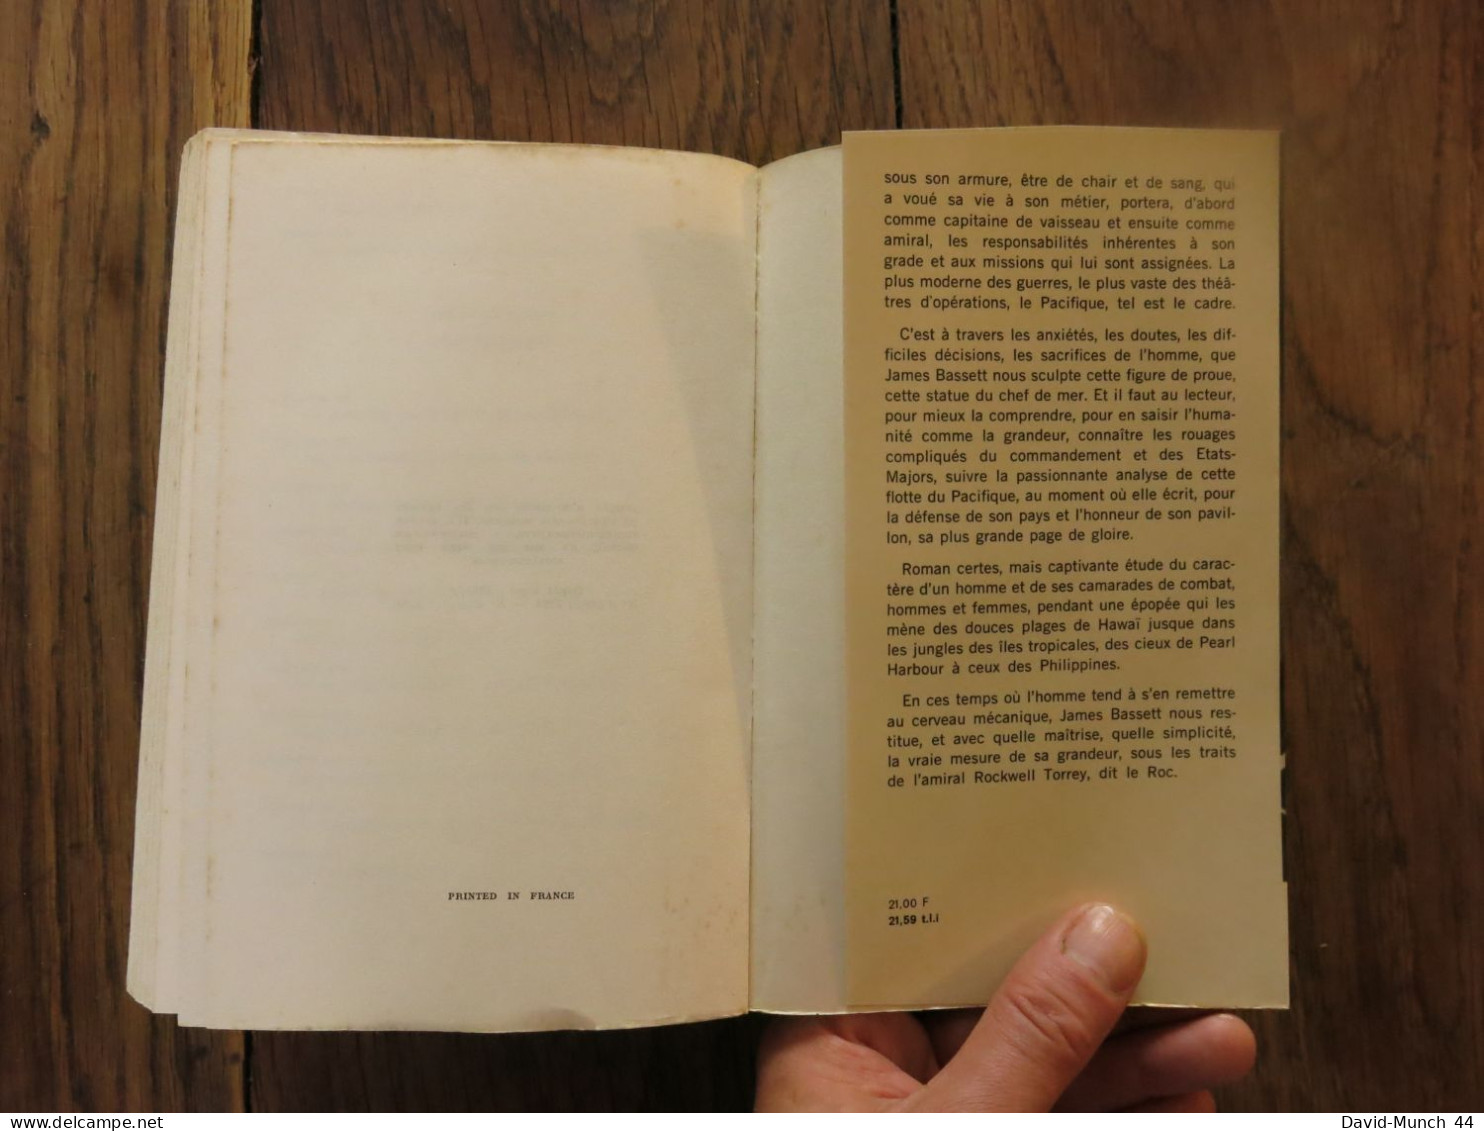 Les voies dangereuses de James Bassett. Editions Albin Michel. 1963